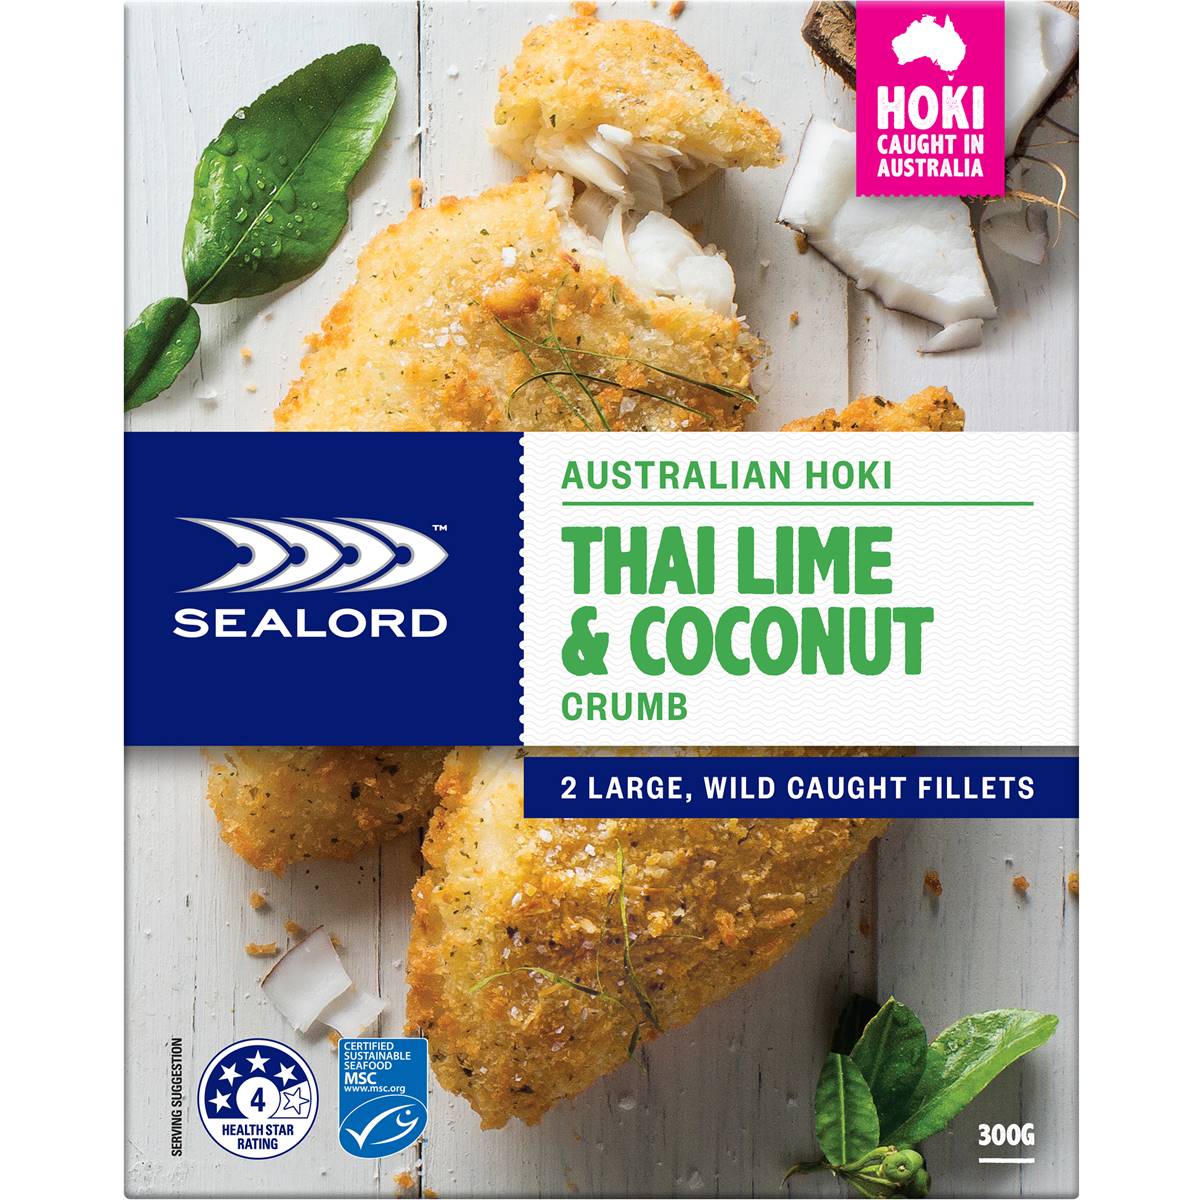 Calories in Sealord Australian Hoki Thai Lime & Coconut Crumb Fish Fillets